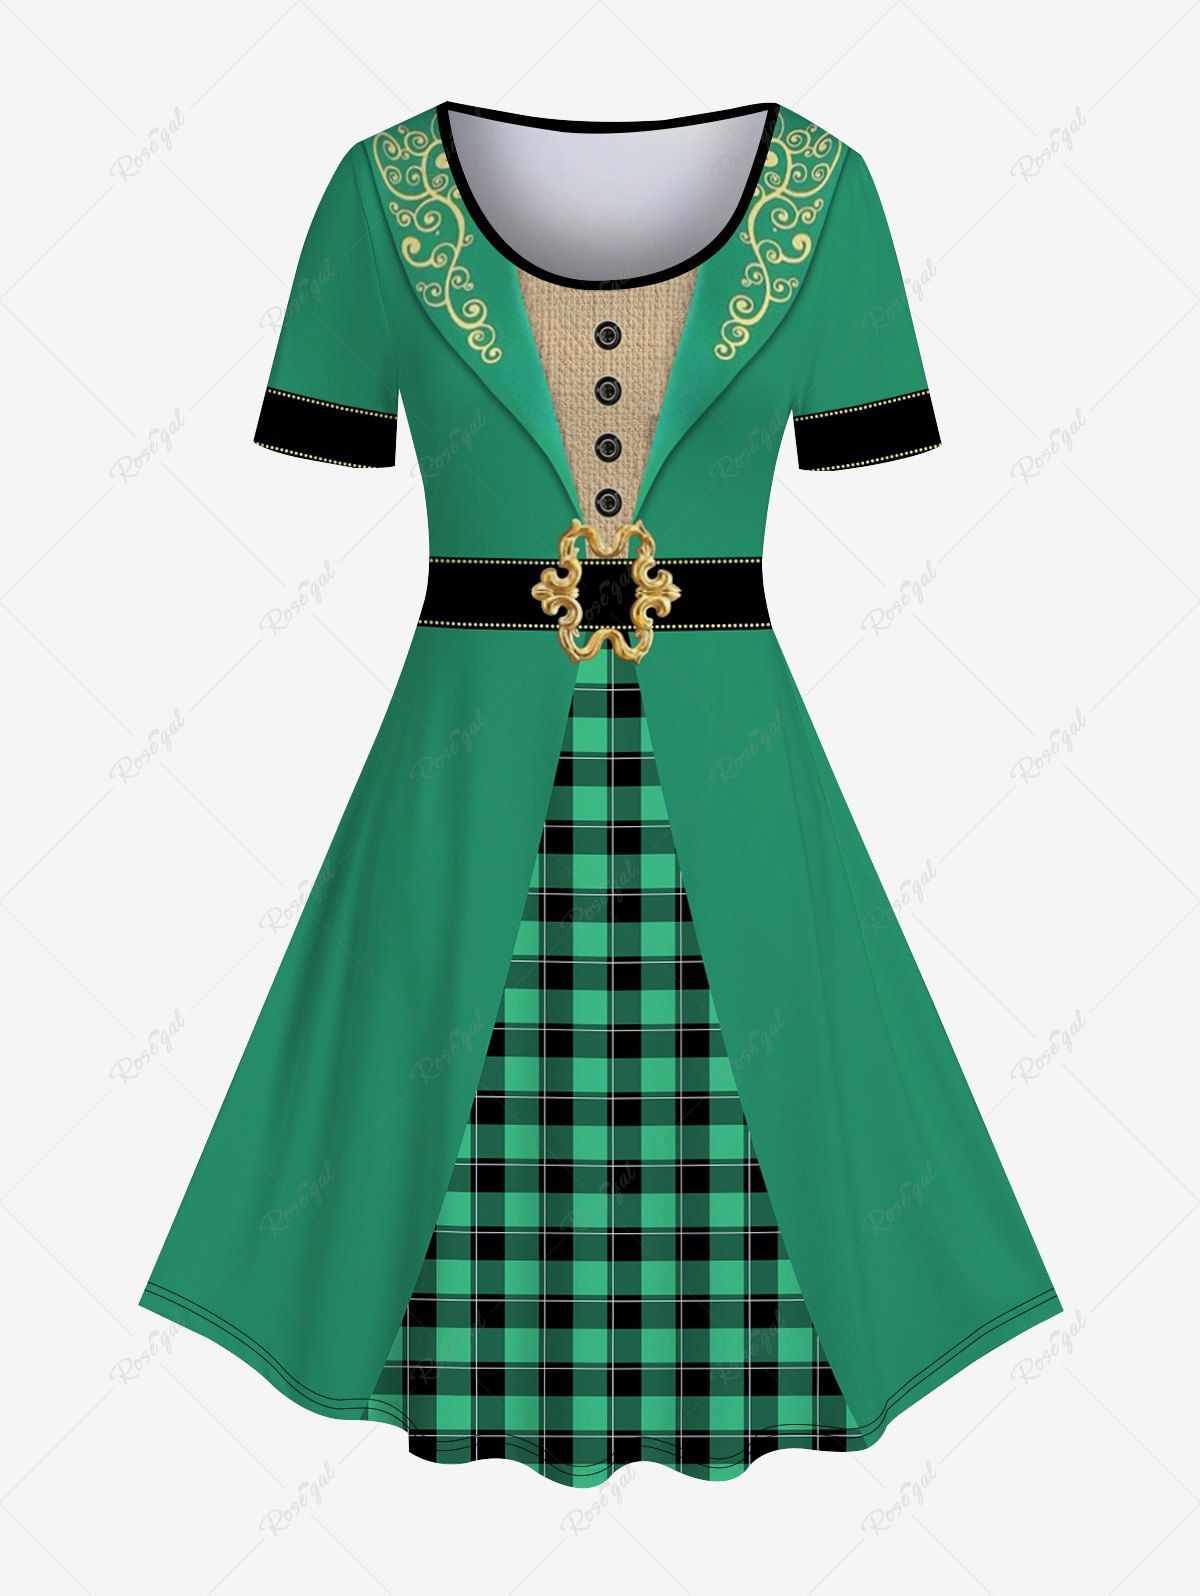 Trendy Plus Size Irish Costume 3D Print Checked Leprechaun Dress Saint Patrick's Day  